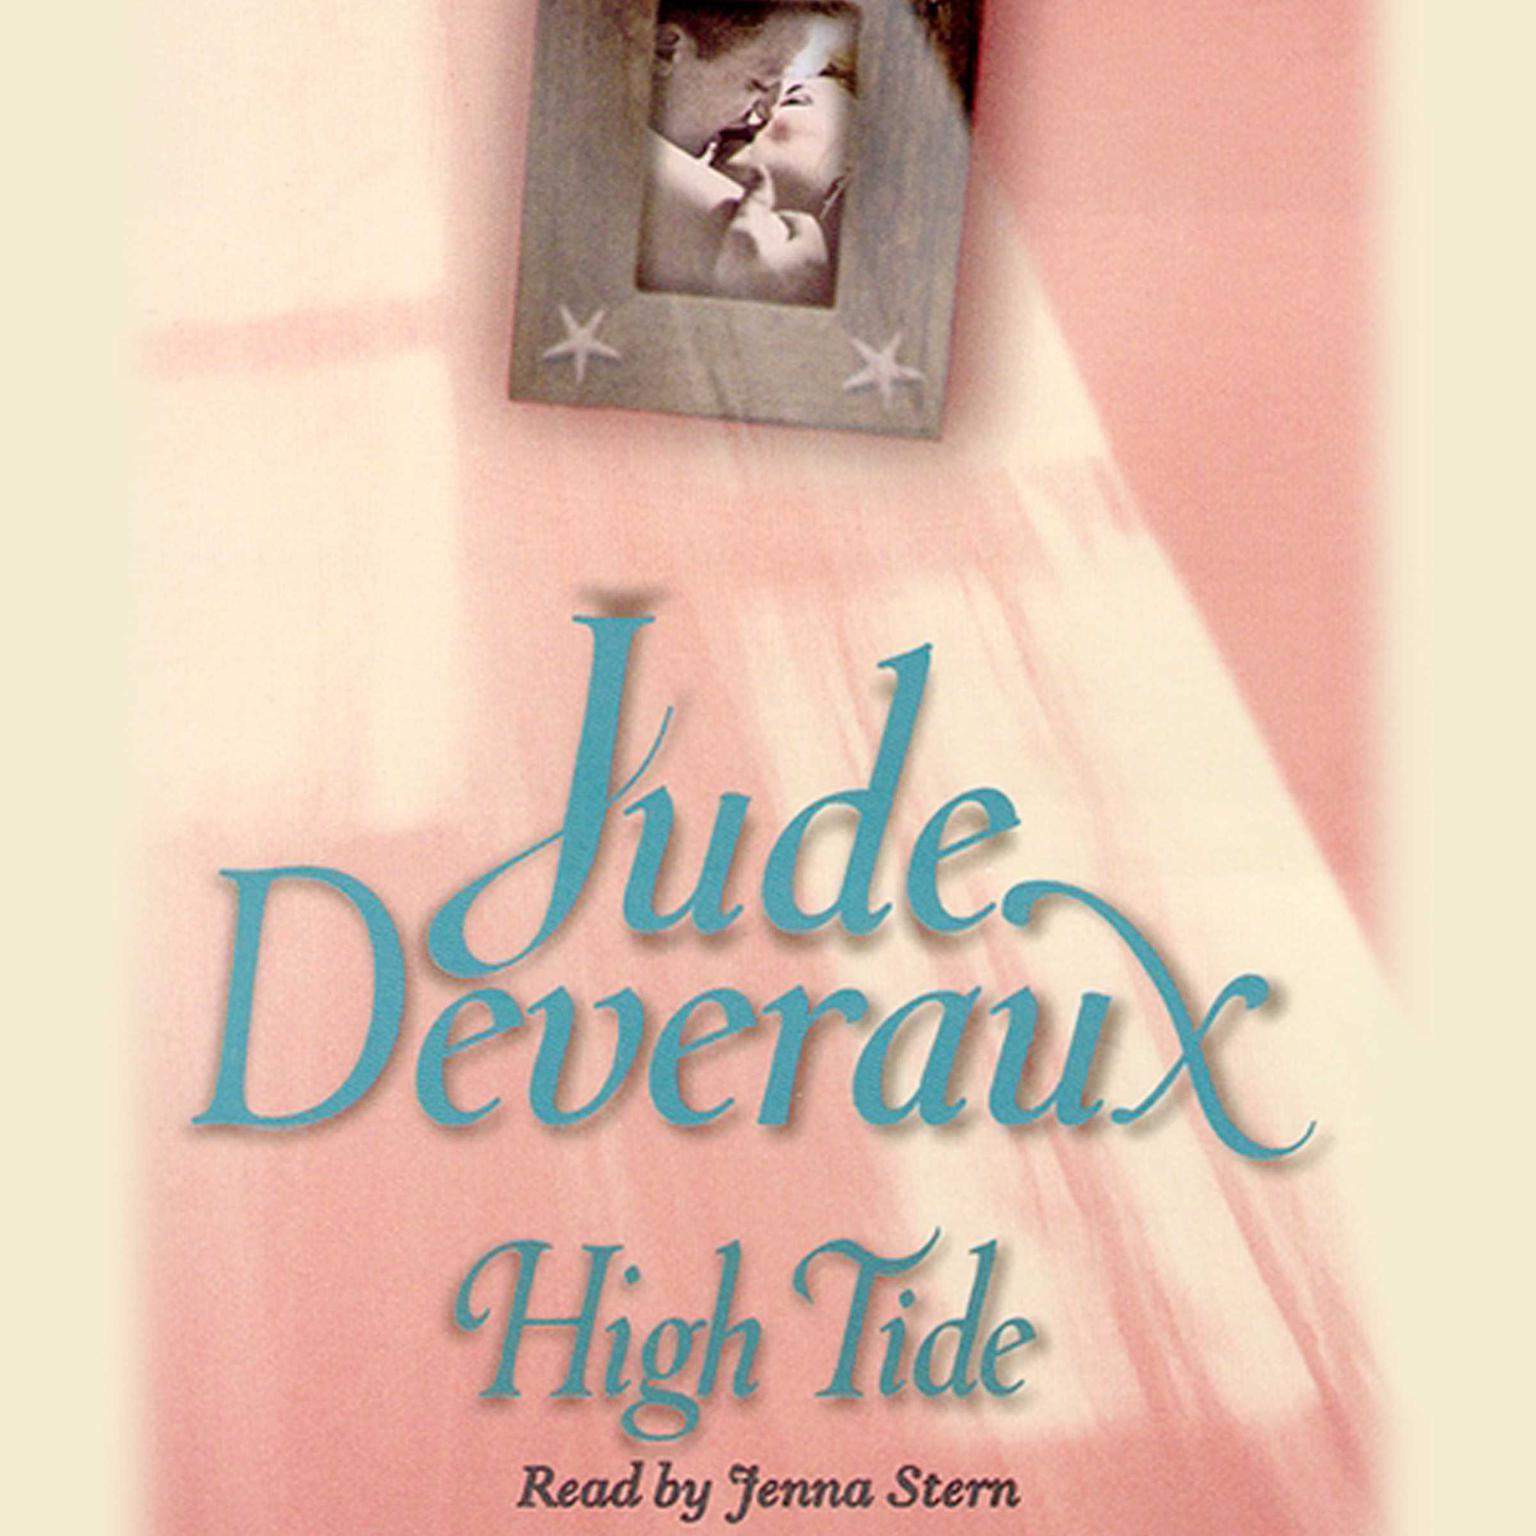 High Tide (Abridged) Audiobook, by Jude Deveraux